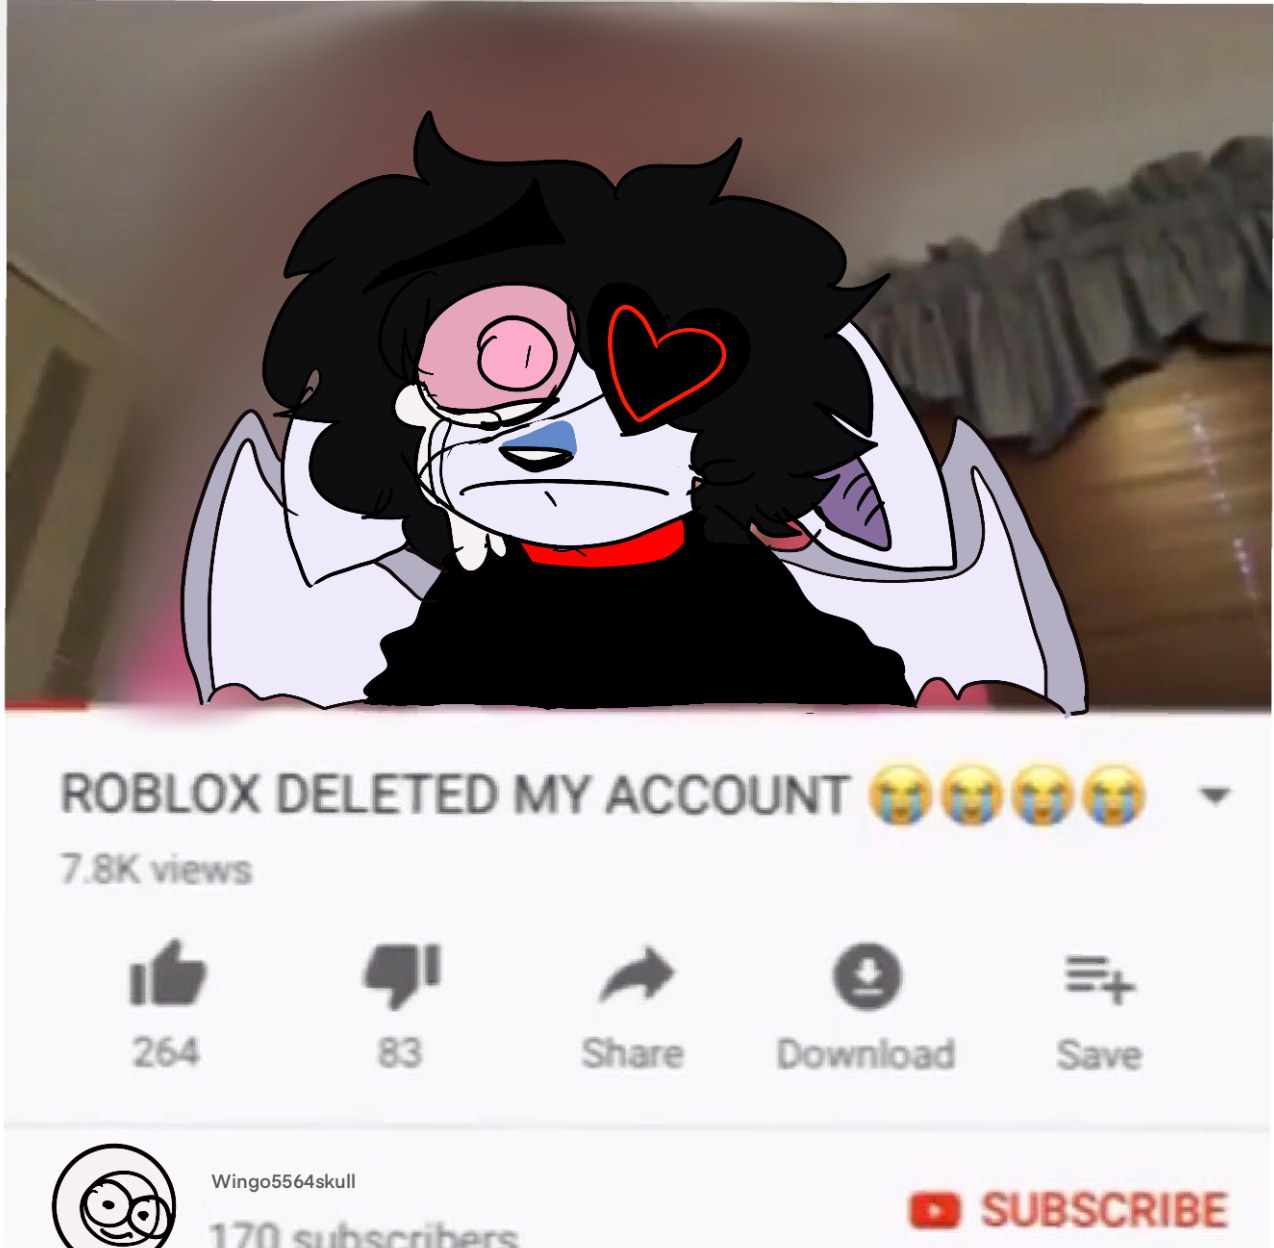 Roblox has a CURSED account DELETE IT? 